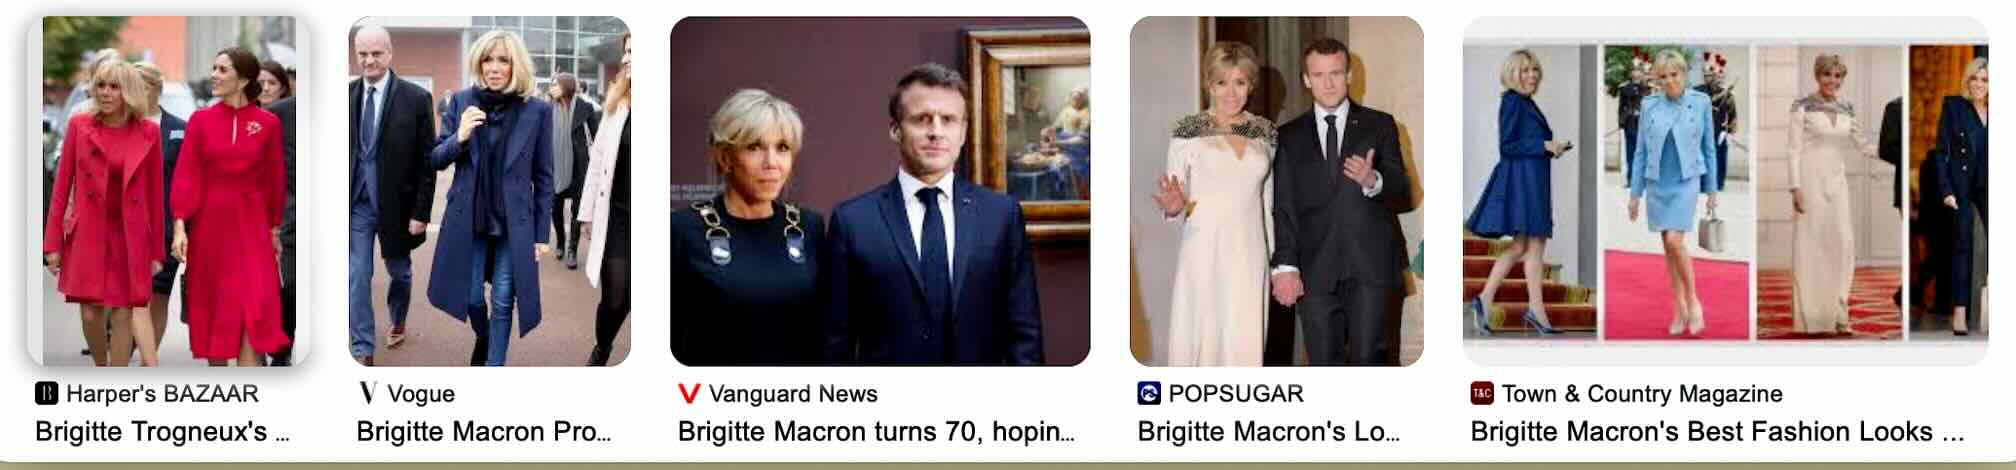 Google images of Brigitte Macron